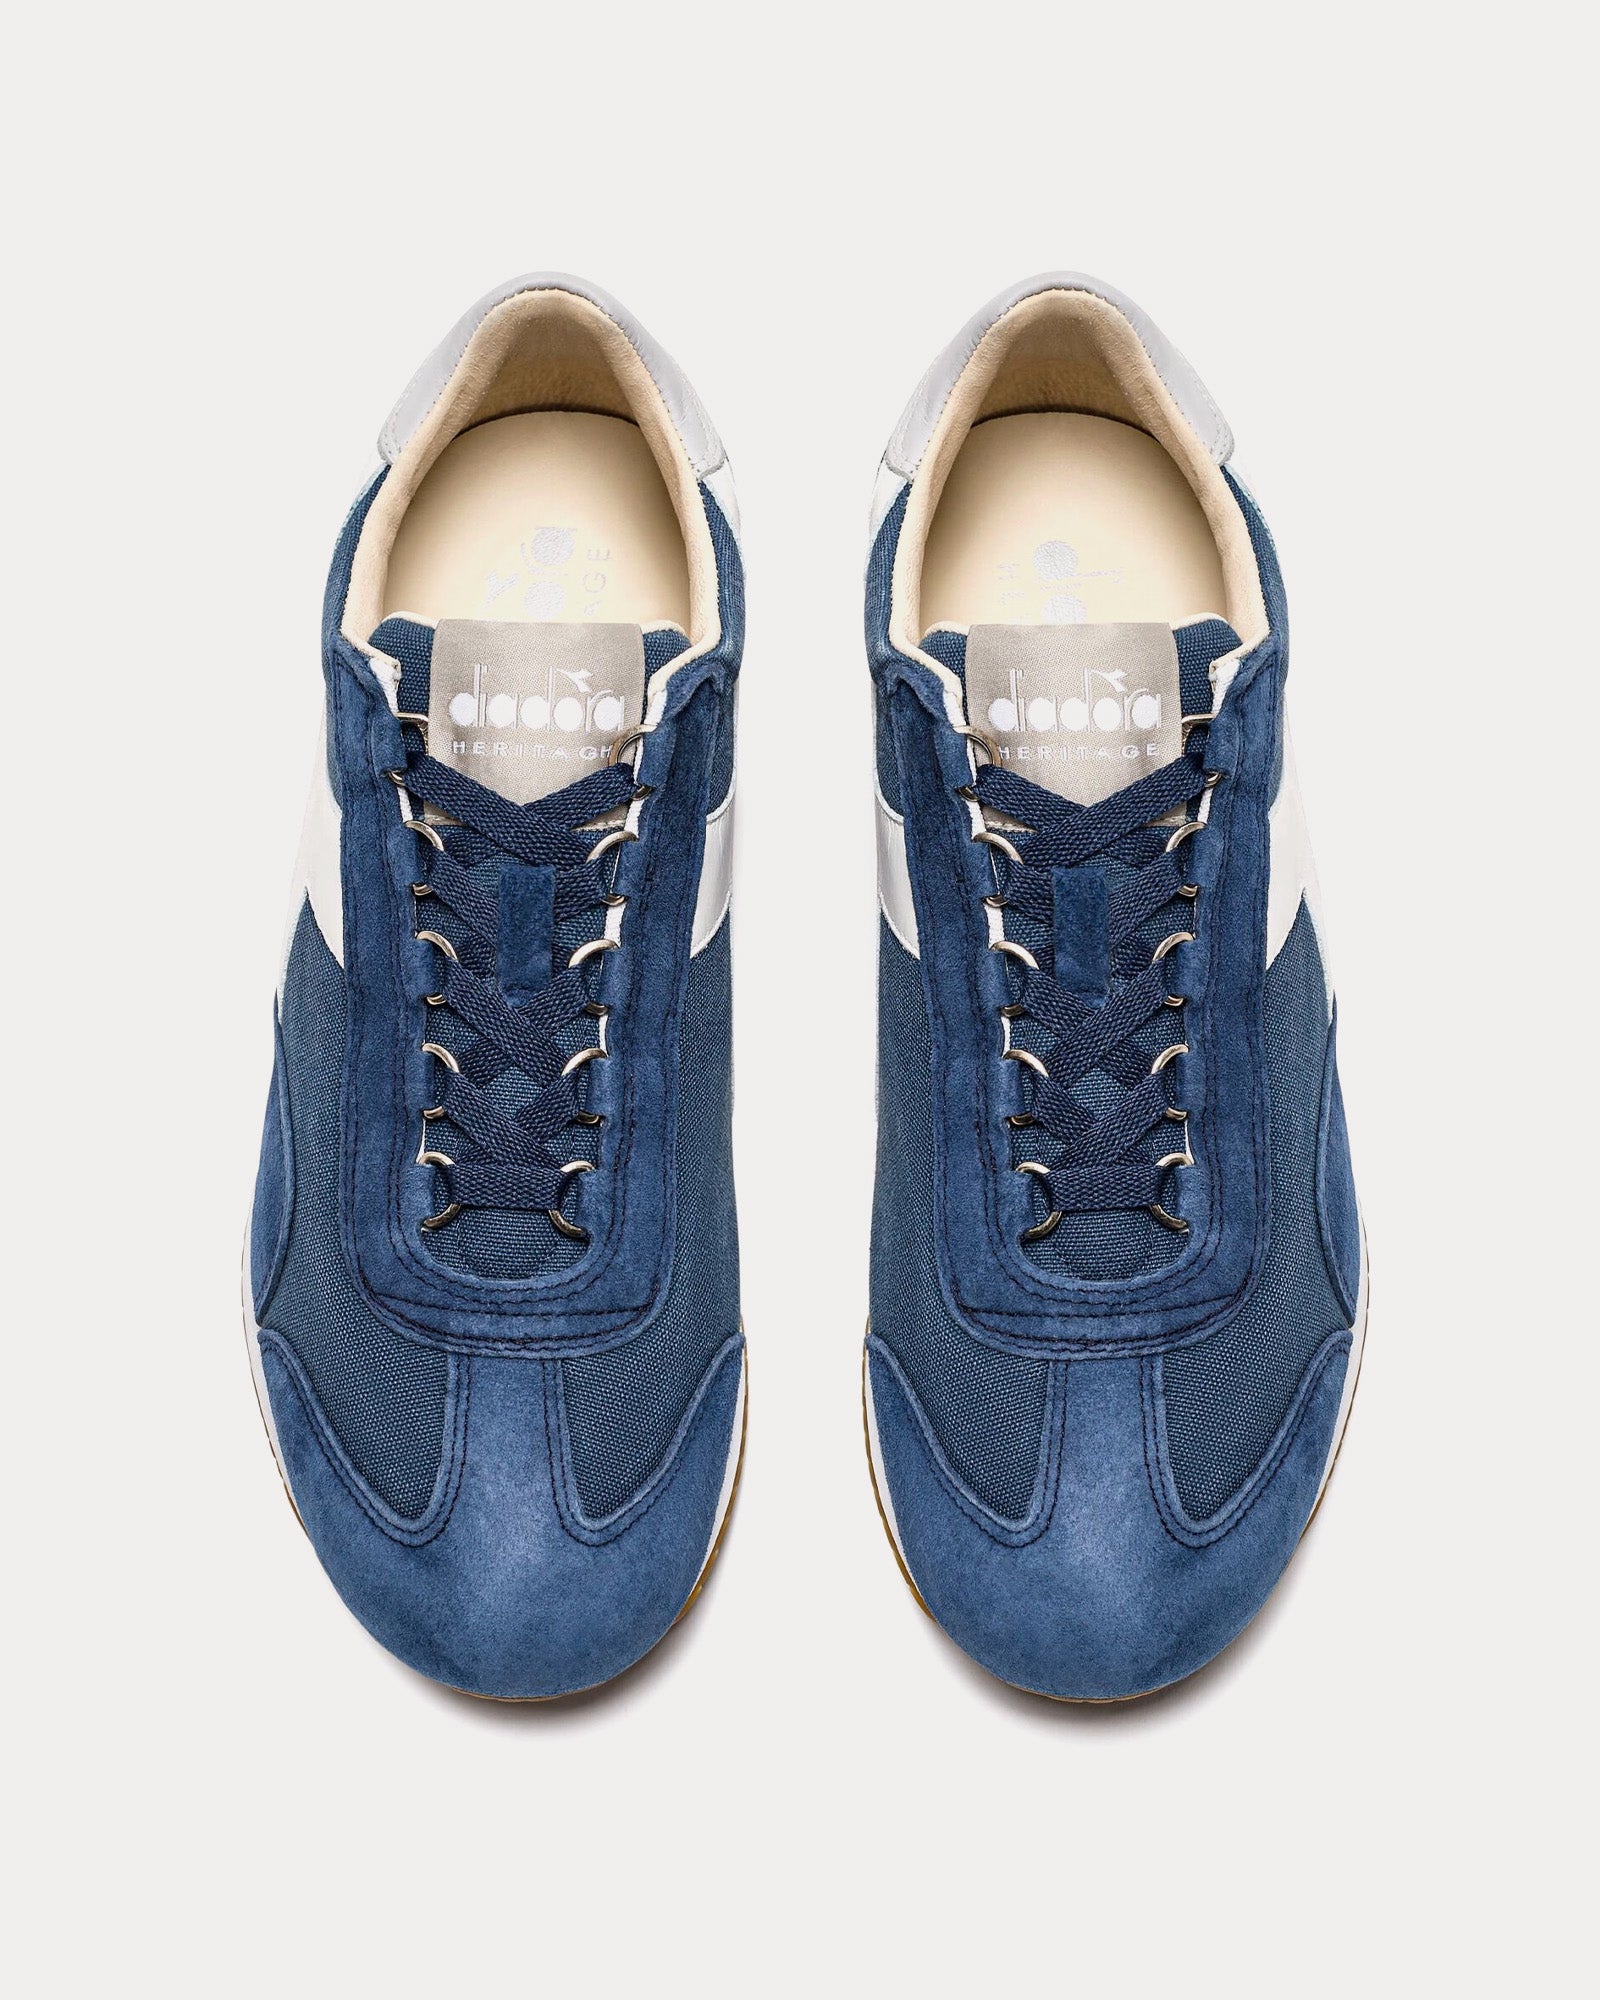 Diadora - Equipe H Canvas Stone Wash Blue Stellar Low Top Sneakers